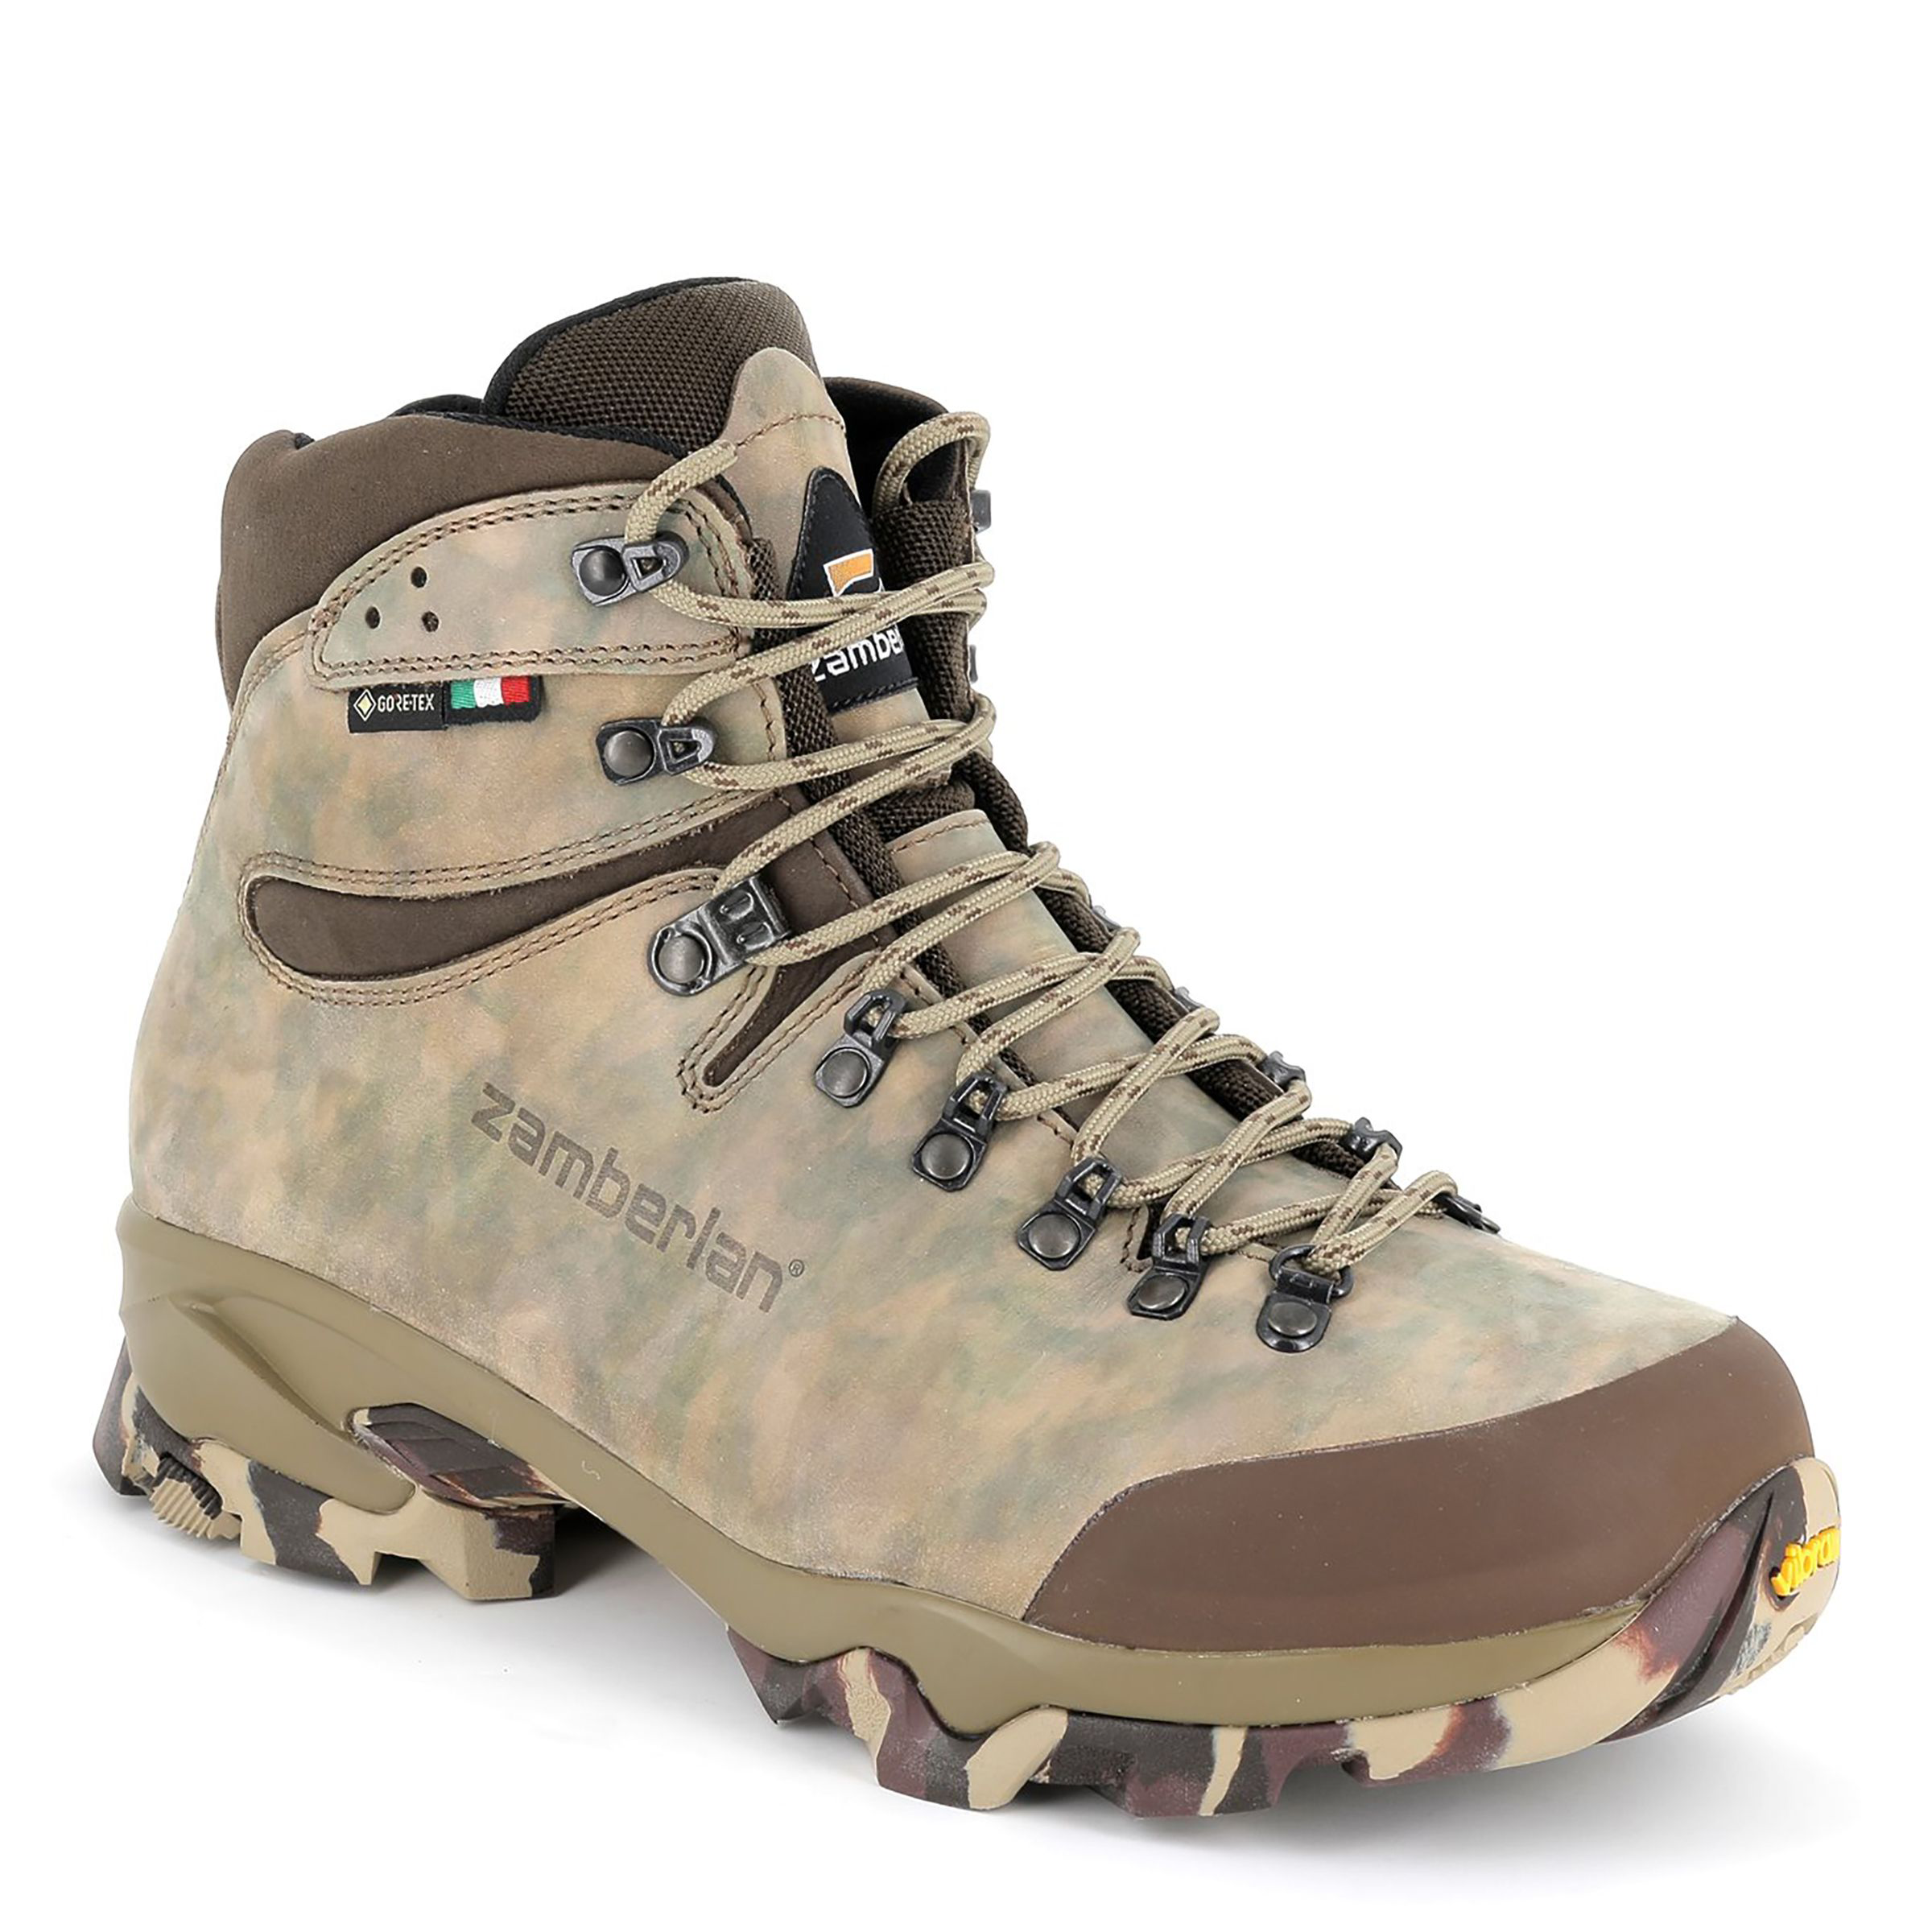 Zamberlan 1213 Leopard GTX RR GORE-TEX Hunting Boots for Men - Beige - 10M